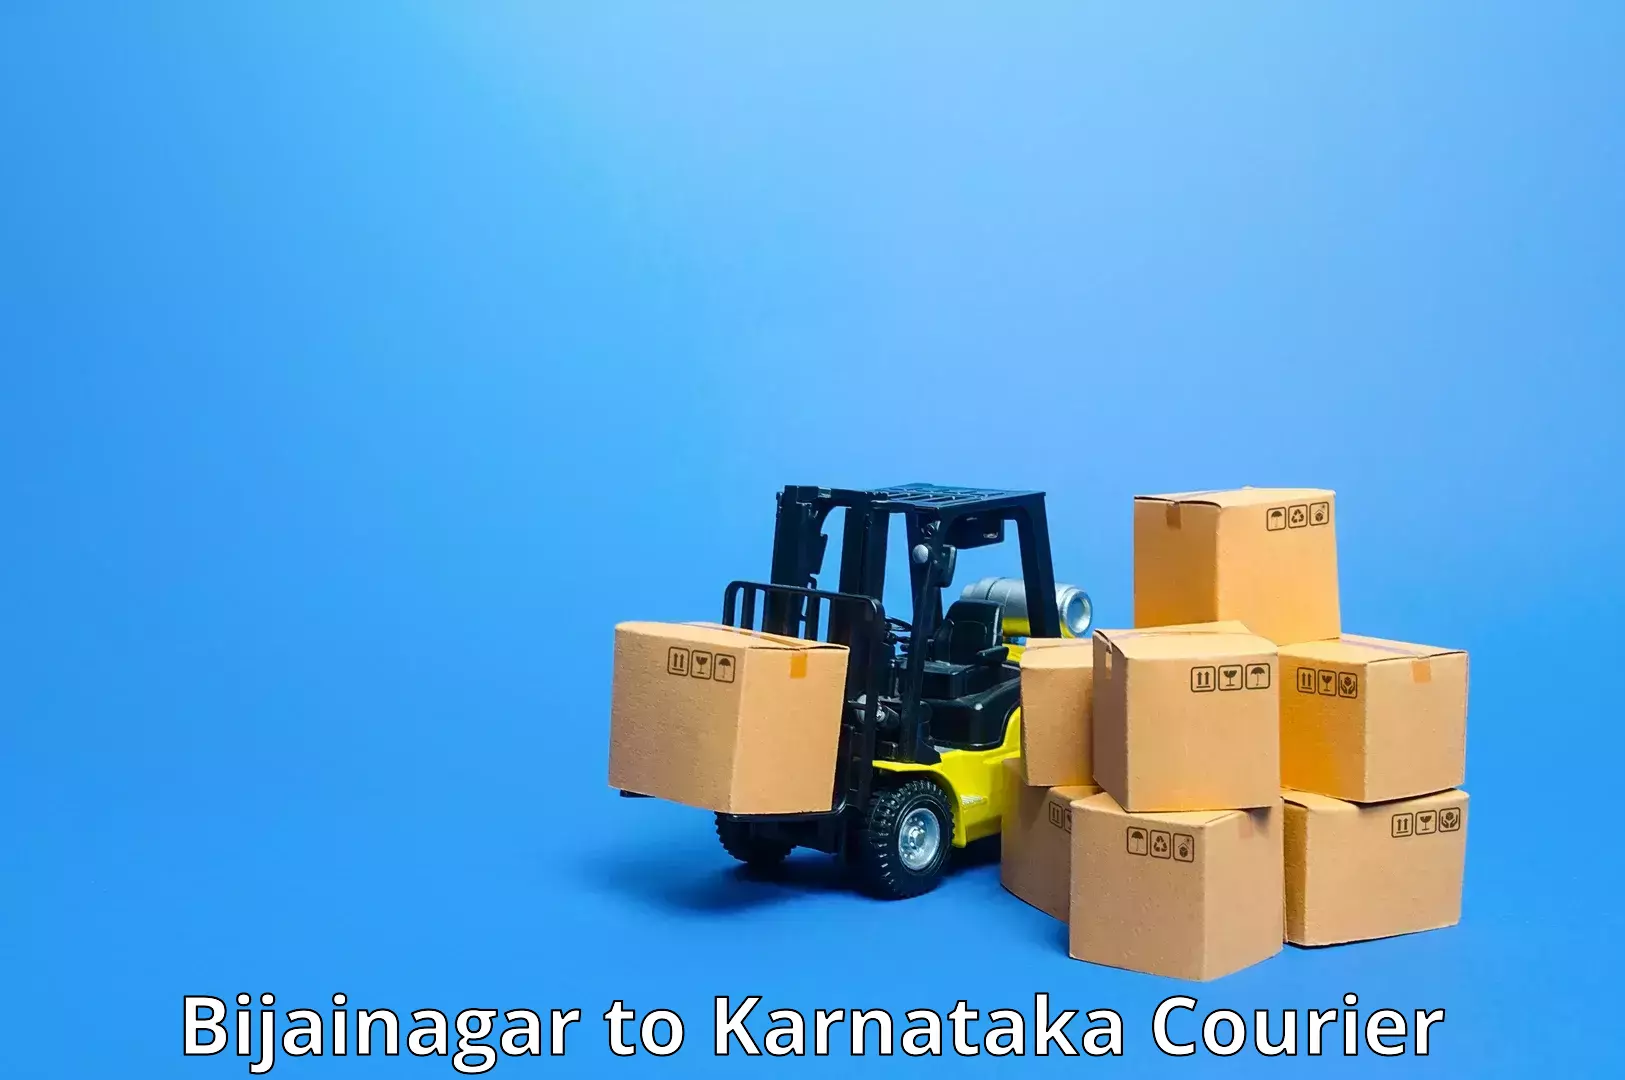 On-call courier service in Bijainagar to Yellapur